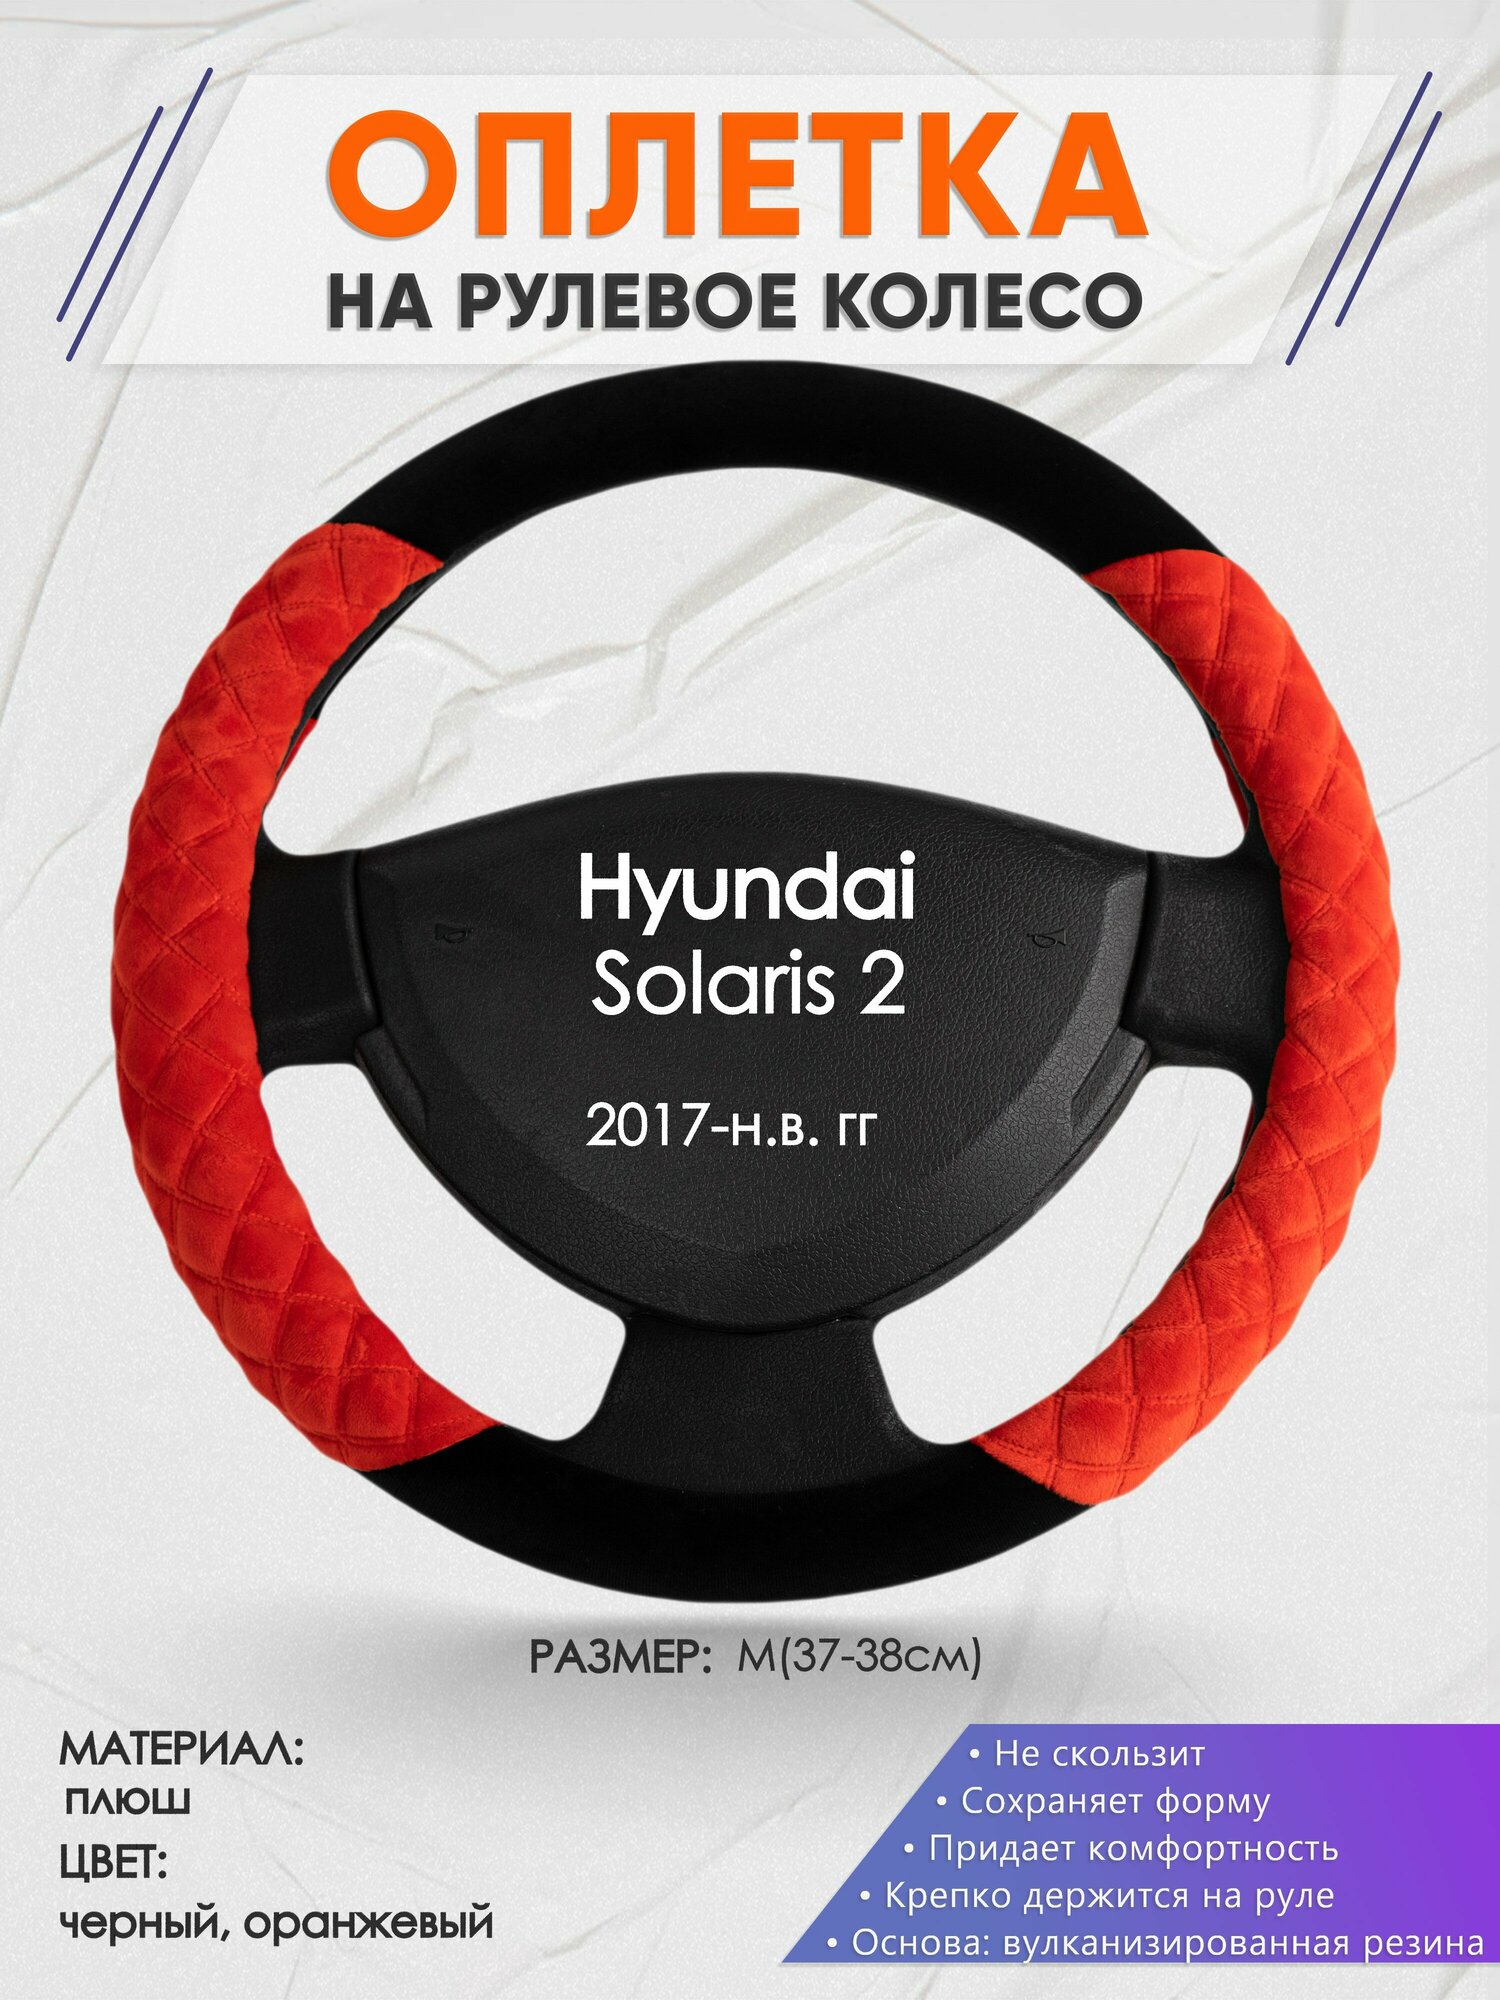 Оплетка на руль для Hyundai Solaris 2(Хендай Солярис 2) 2017-н. в, M(37-38см), Замша 37